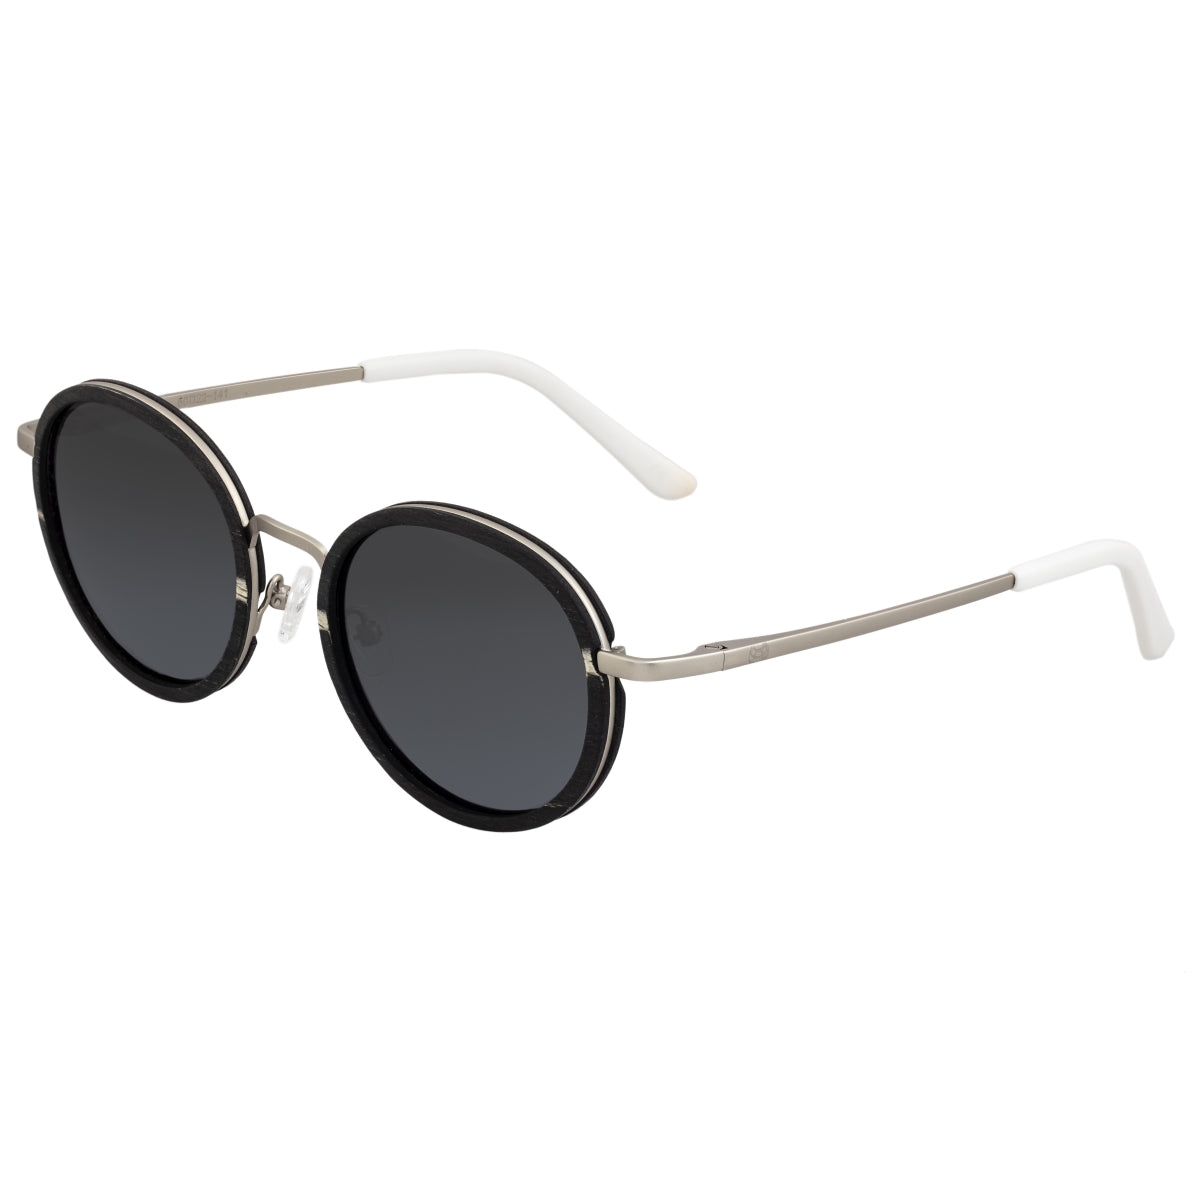 Earth Wood Himara Unisex Sunglasses Silver Frame Black Lens